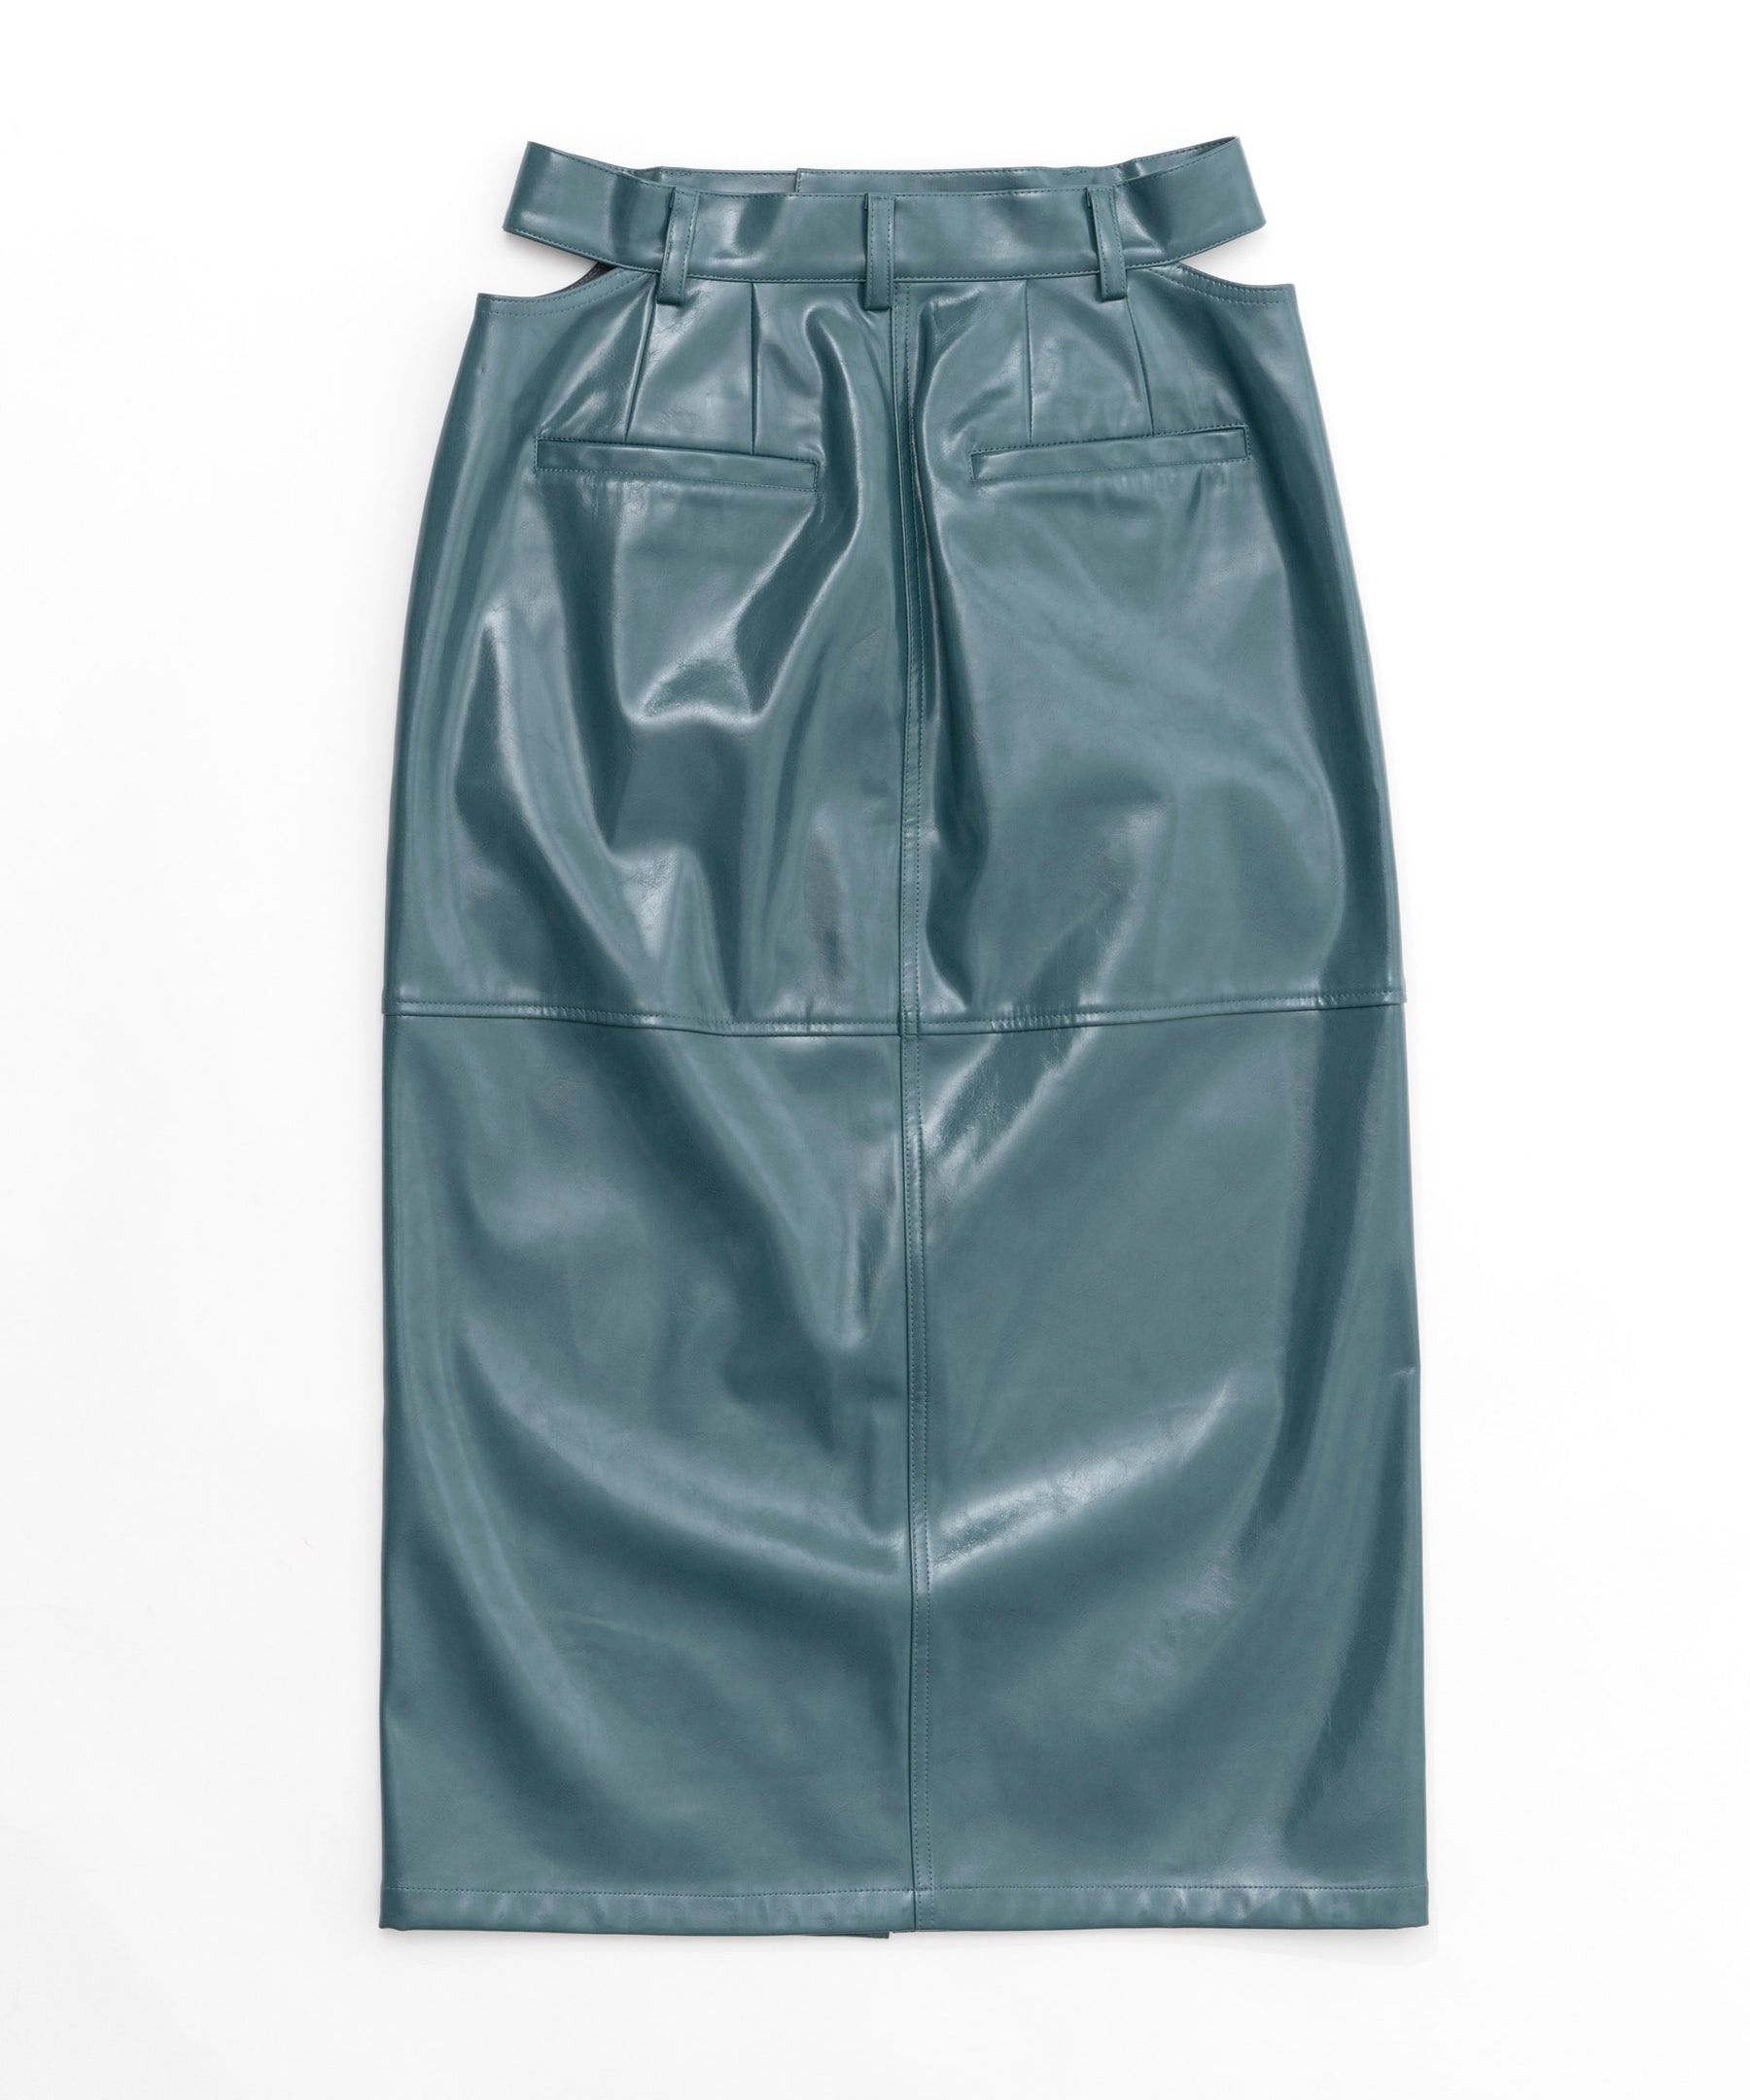 【SALE】Vegan Leather Tight Skirt